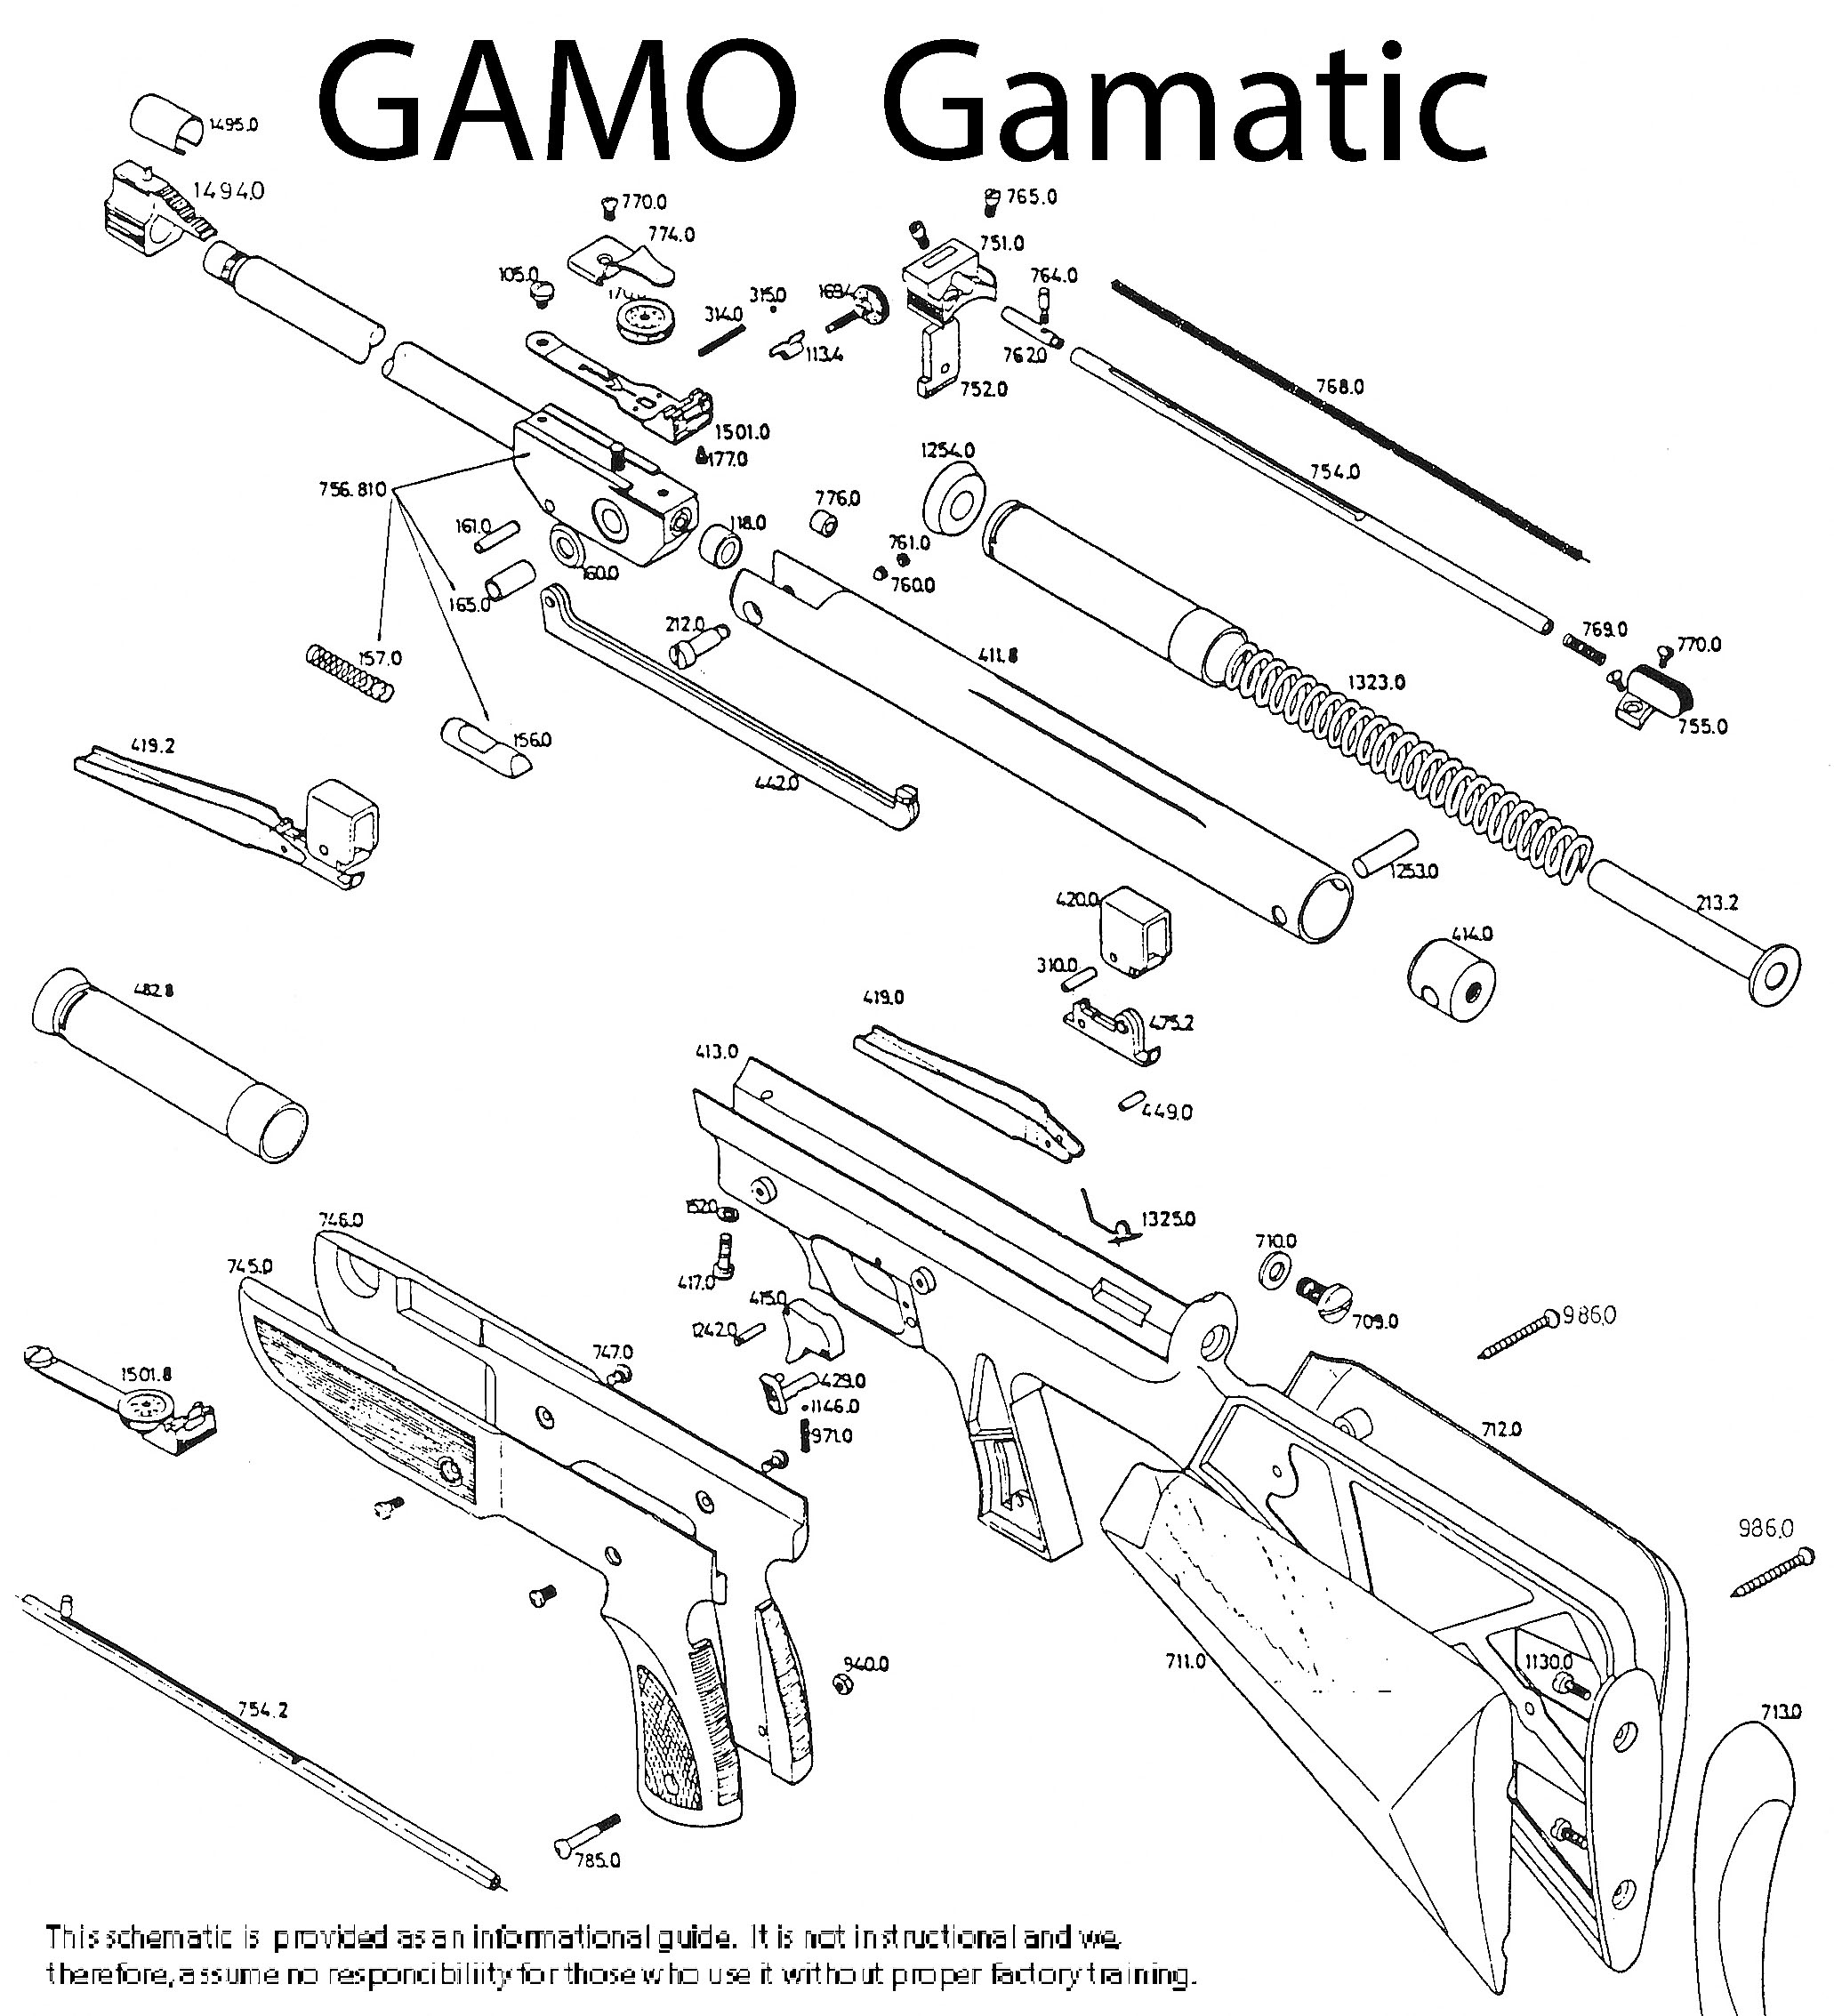 Gamatic Schematic